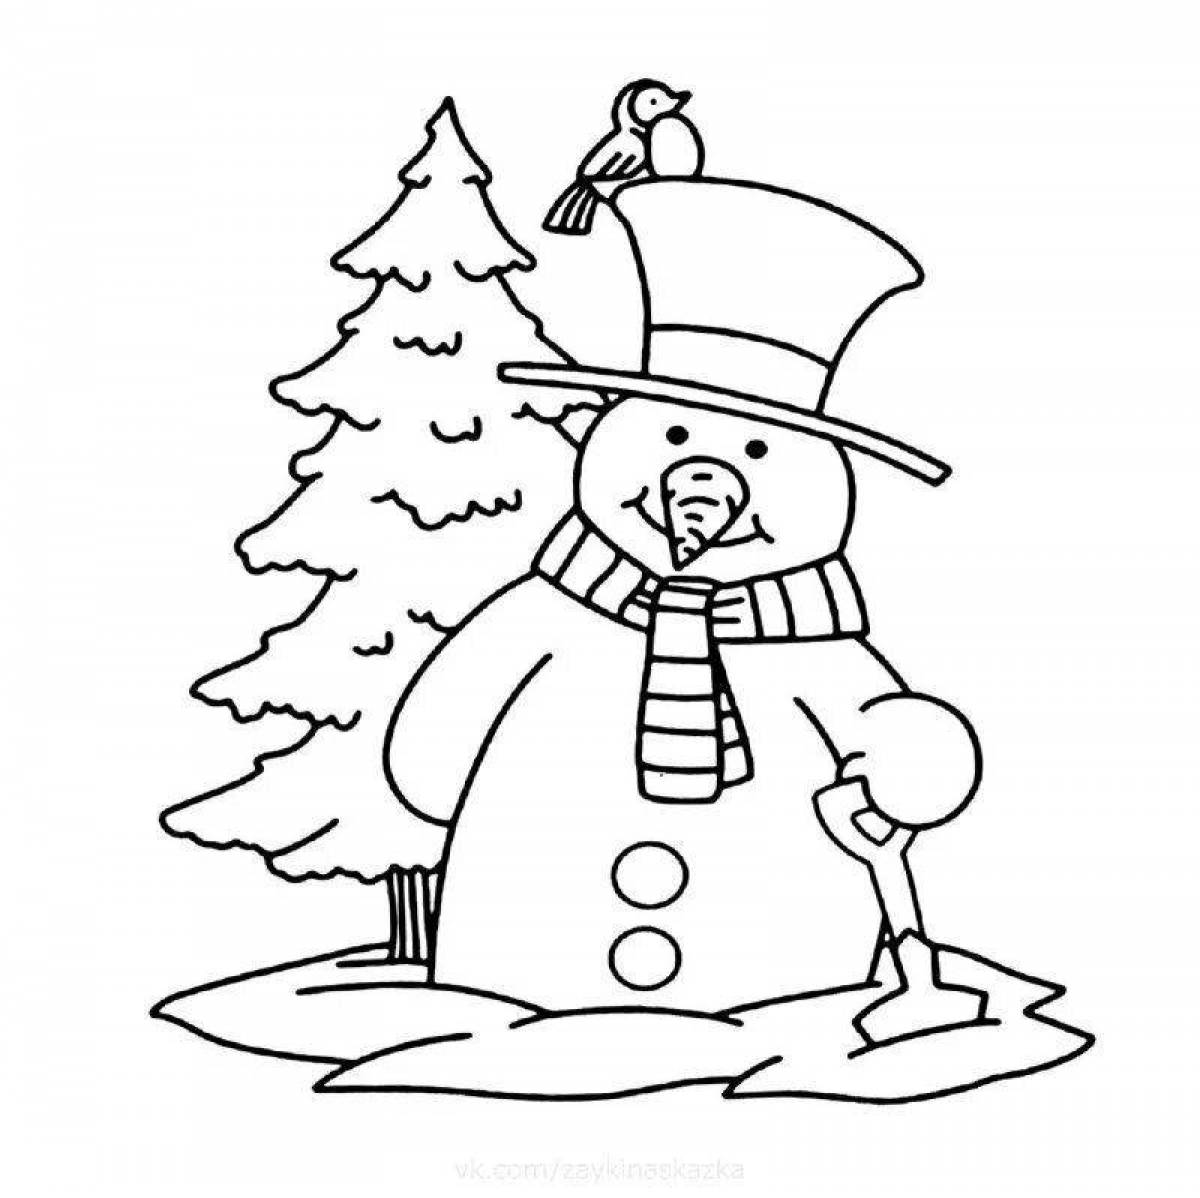 Coloring book joyful tree and snowman